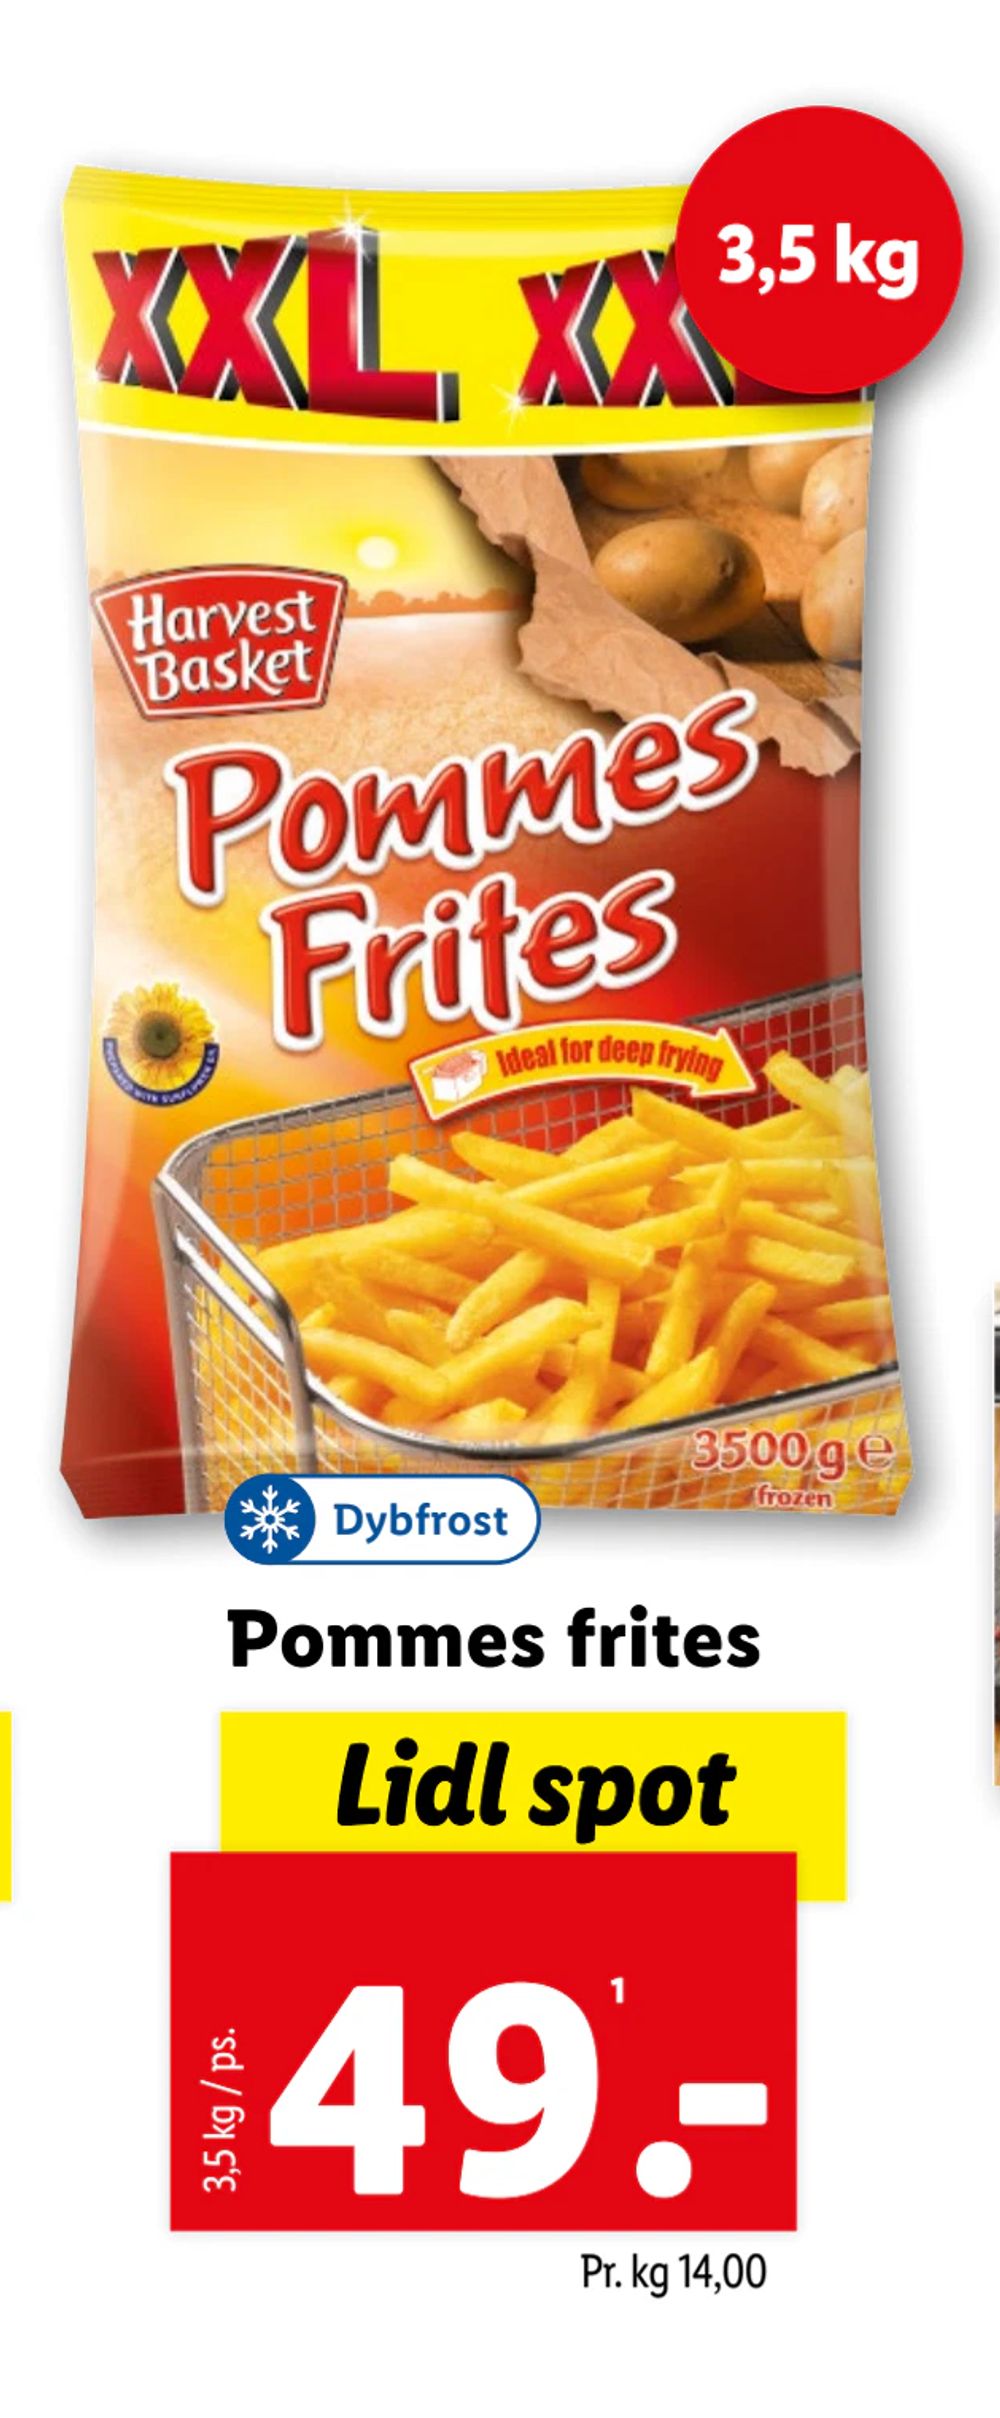 Tilbud på Pommes frites fra Lidl til 49 kr.